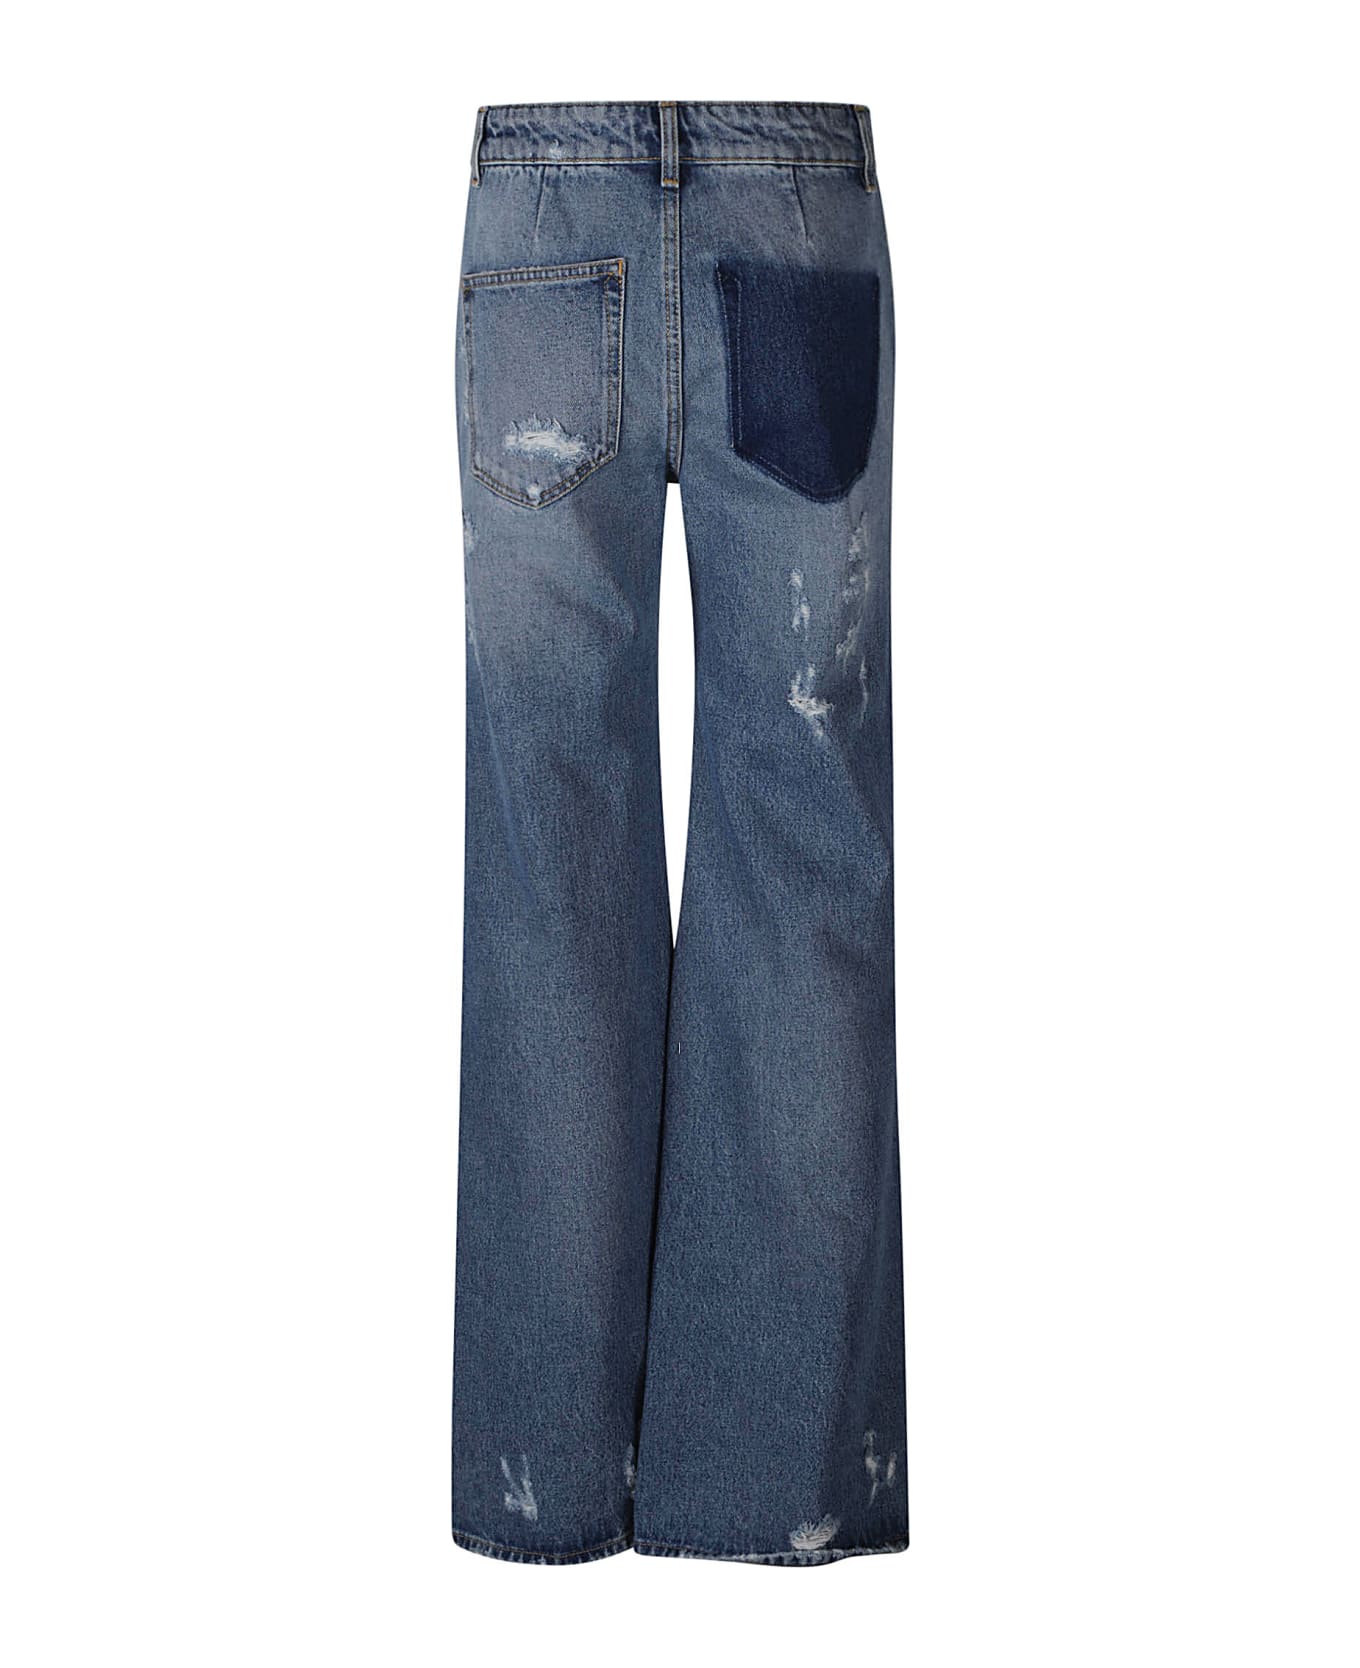 Paco Rabanne Distressed Straight Jeans - Denim